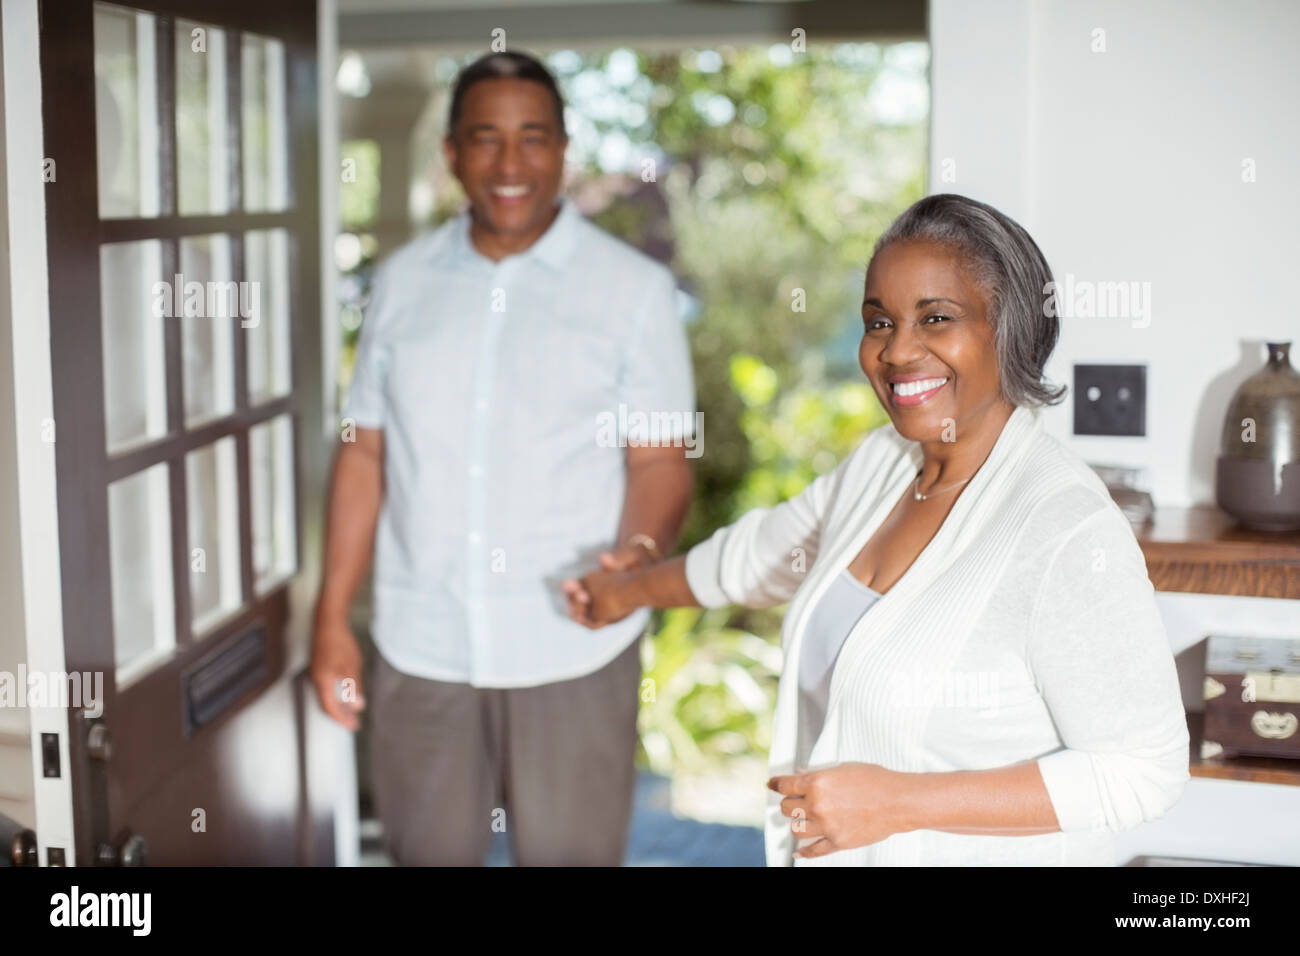 Portrait of smiling senior couple holding hands in doorway Stock Photo